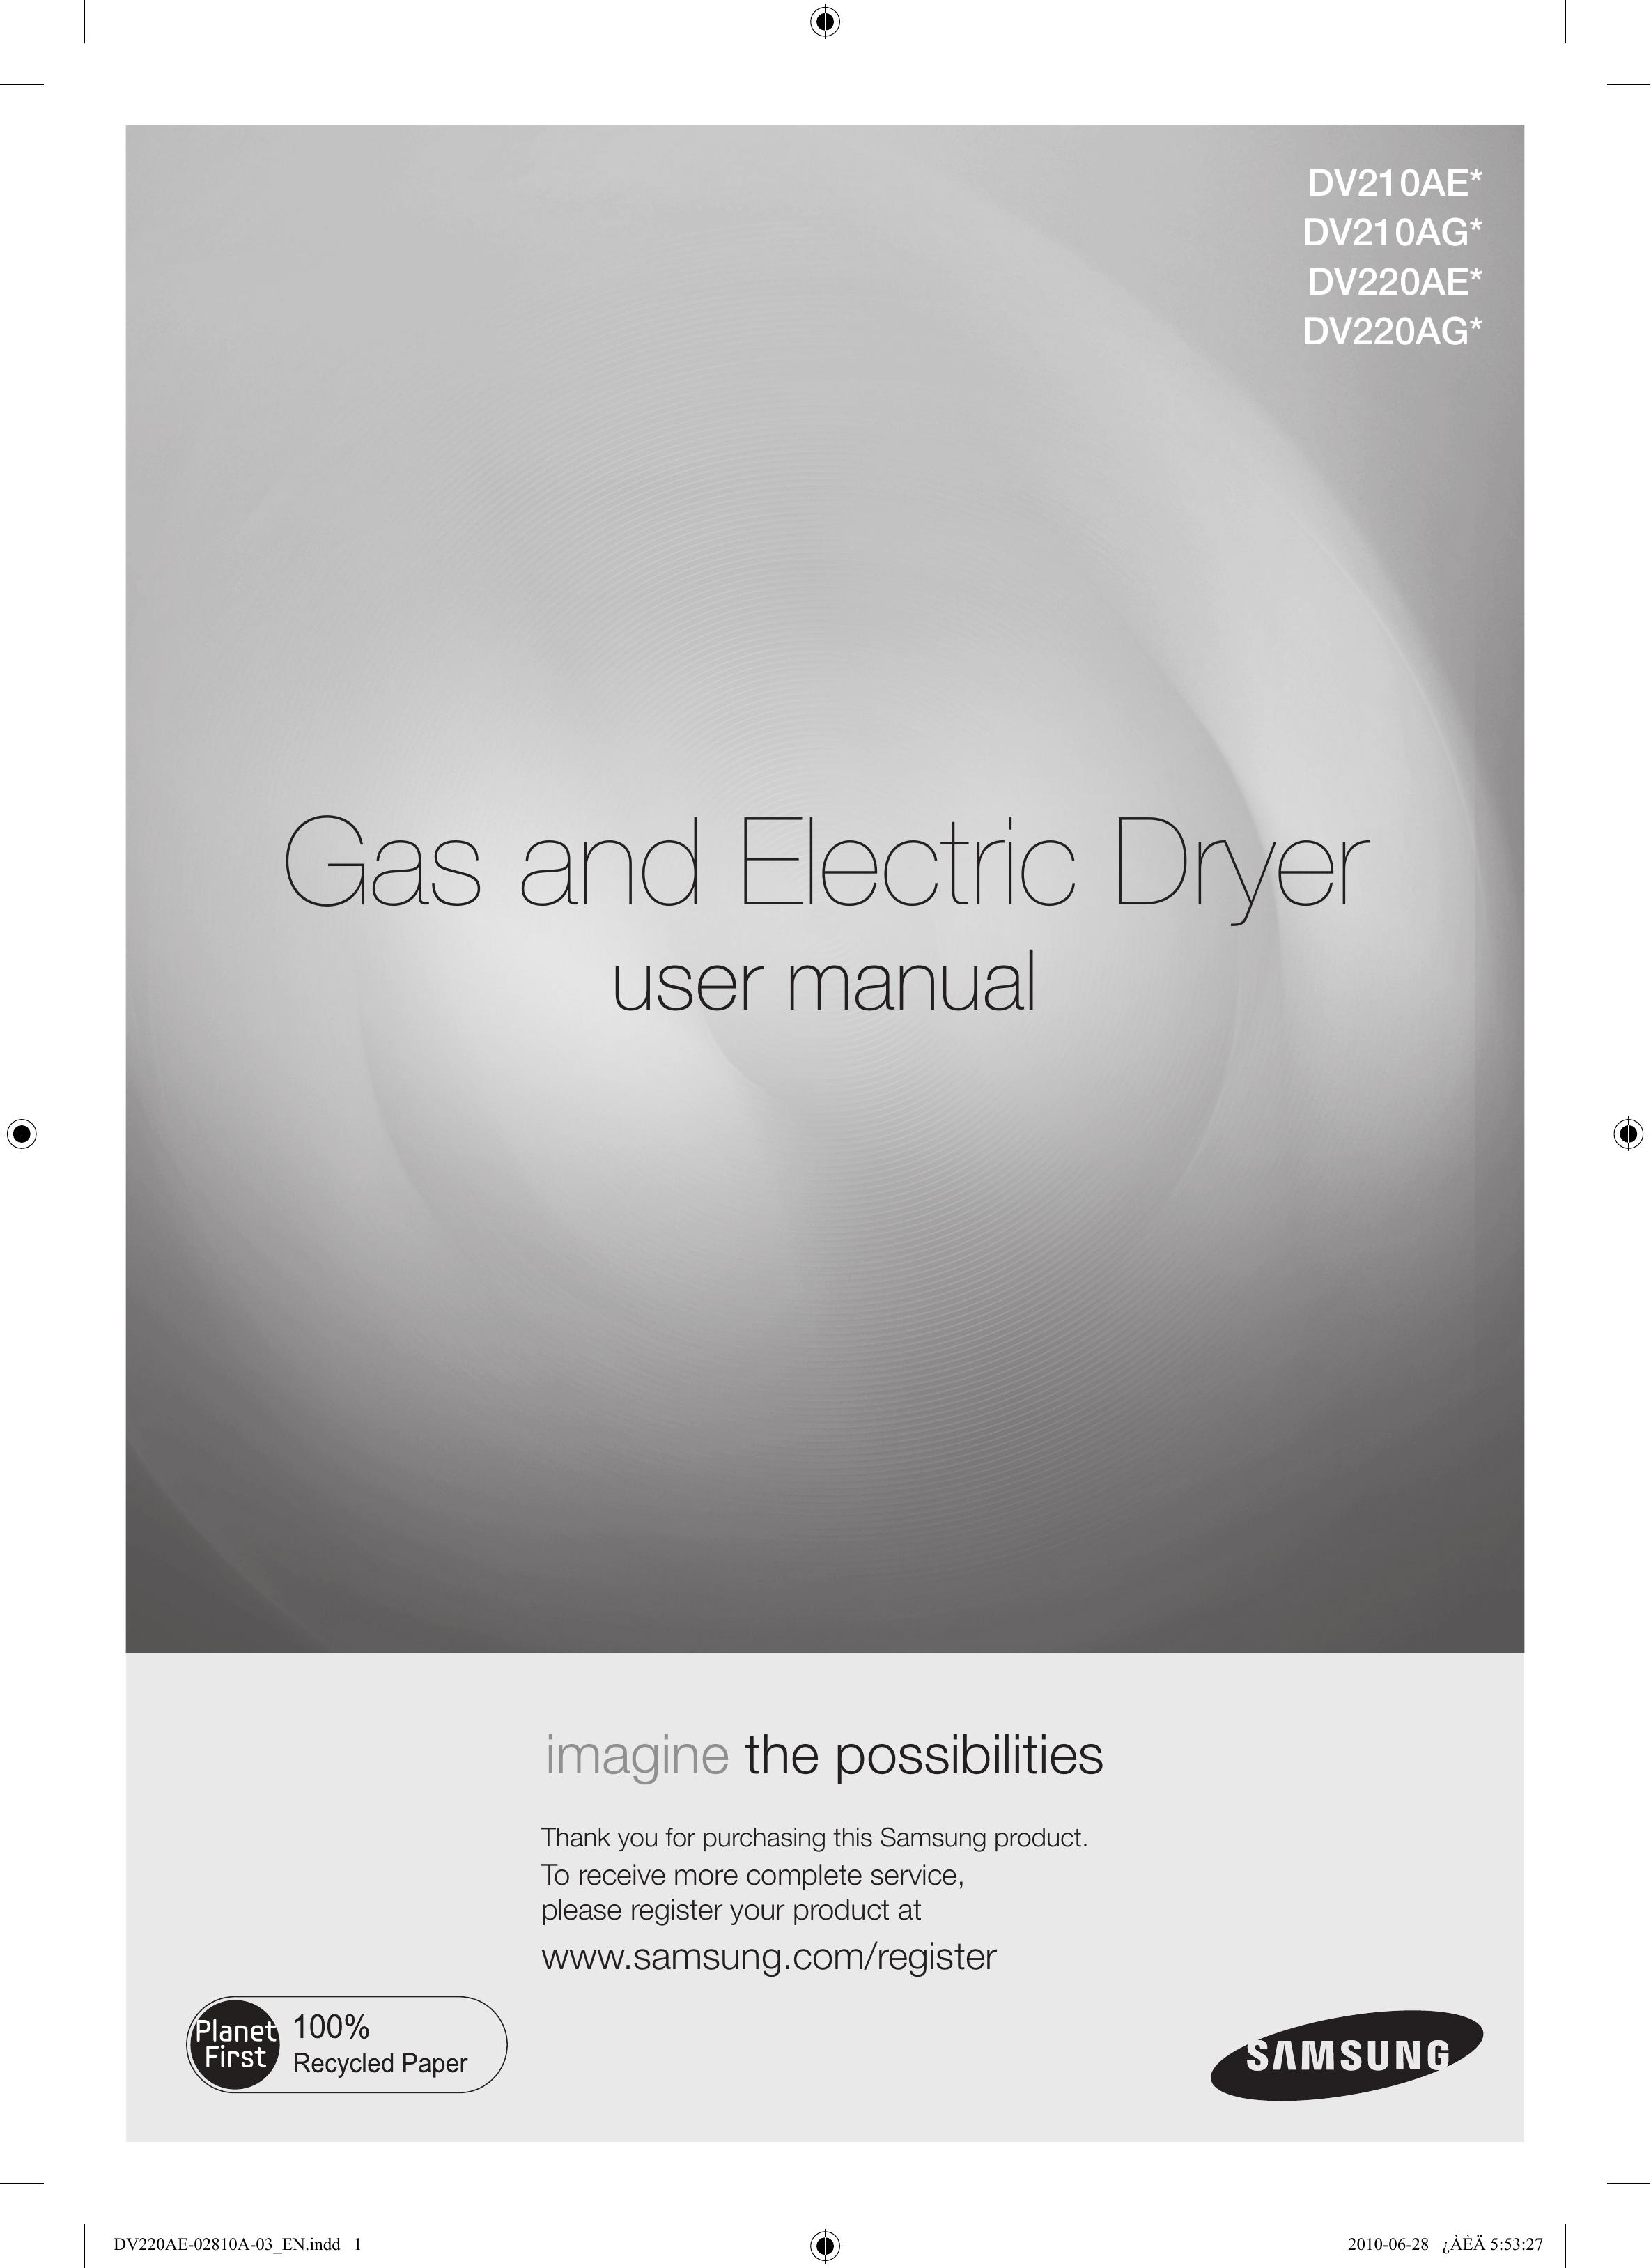 Samsung DV220AG* Clothes Dryer User Manual